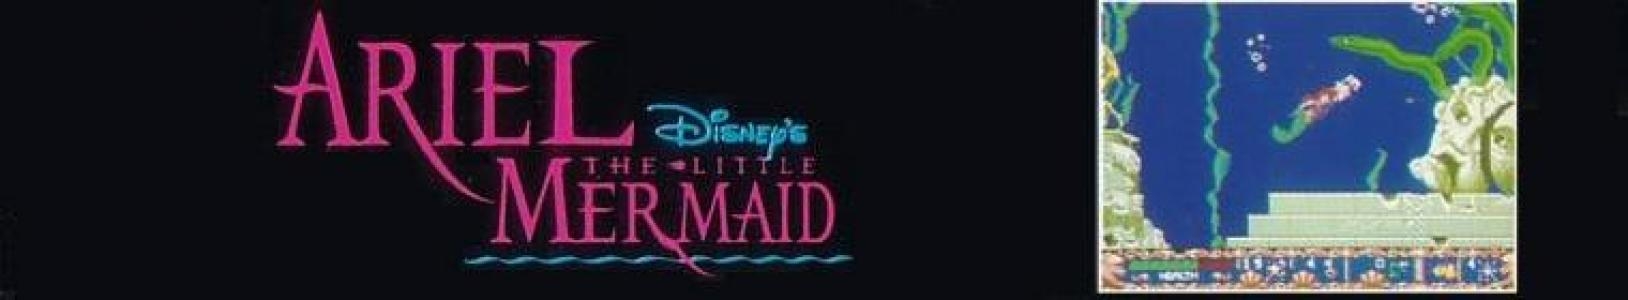 Disney's Ariel: The Little Mermaid banner